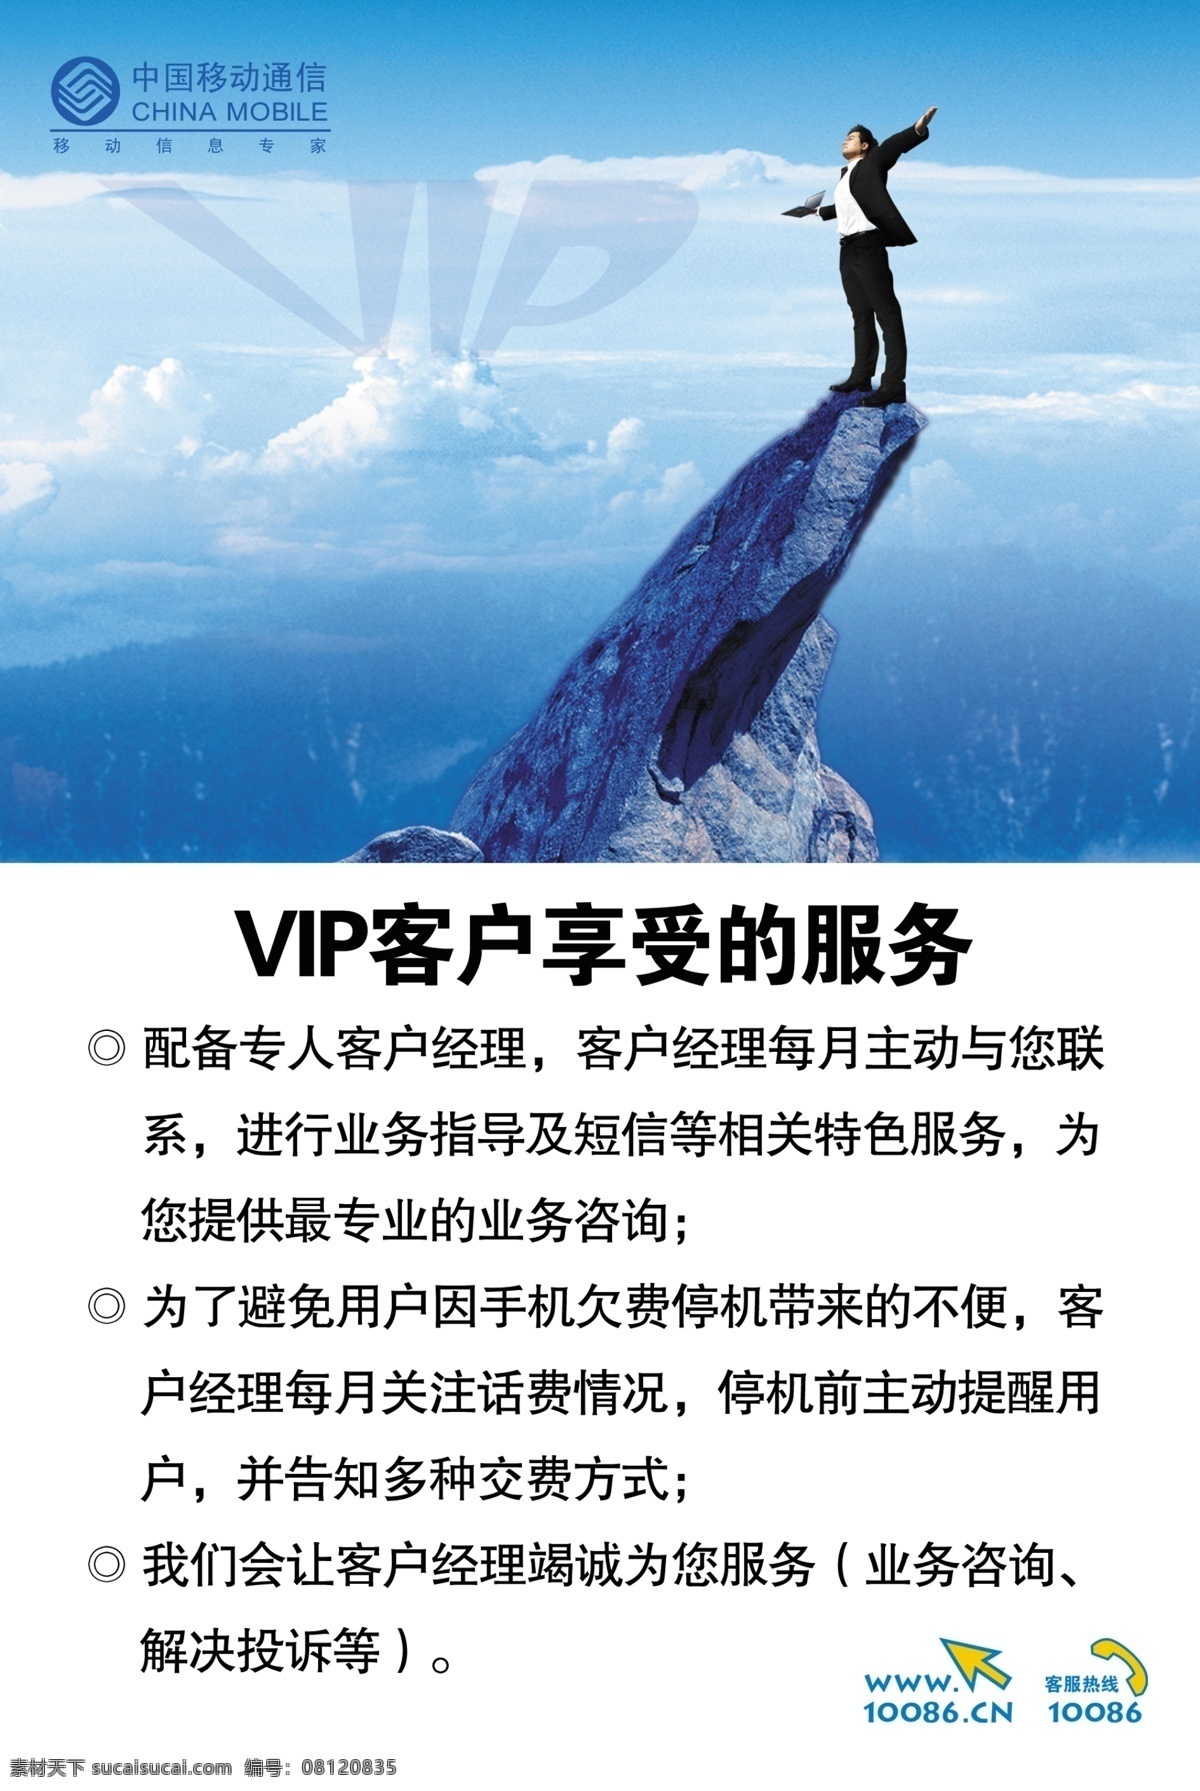 vip vip海报 白云 衬衫 广告设计模板 客户 蓝色 人物 山顶 天空 享受服务 中国移动 仰望 西装 海报 源文件 其他海报设计